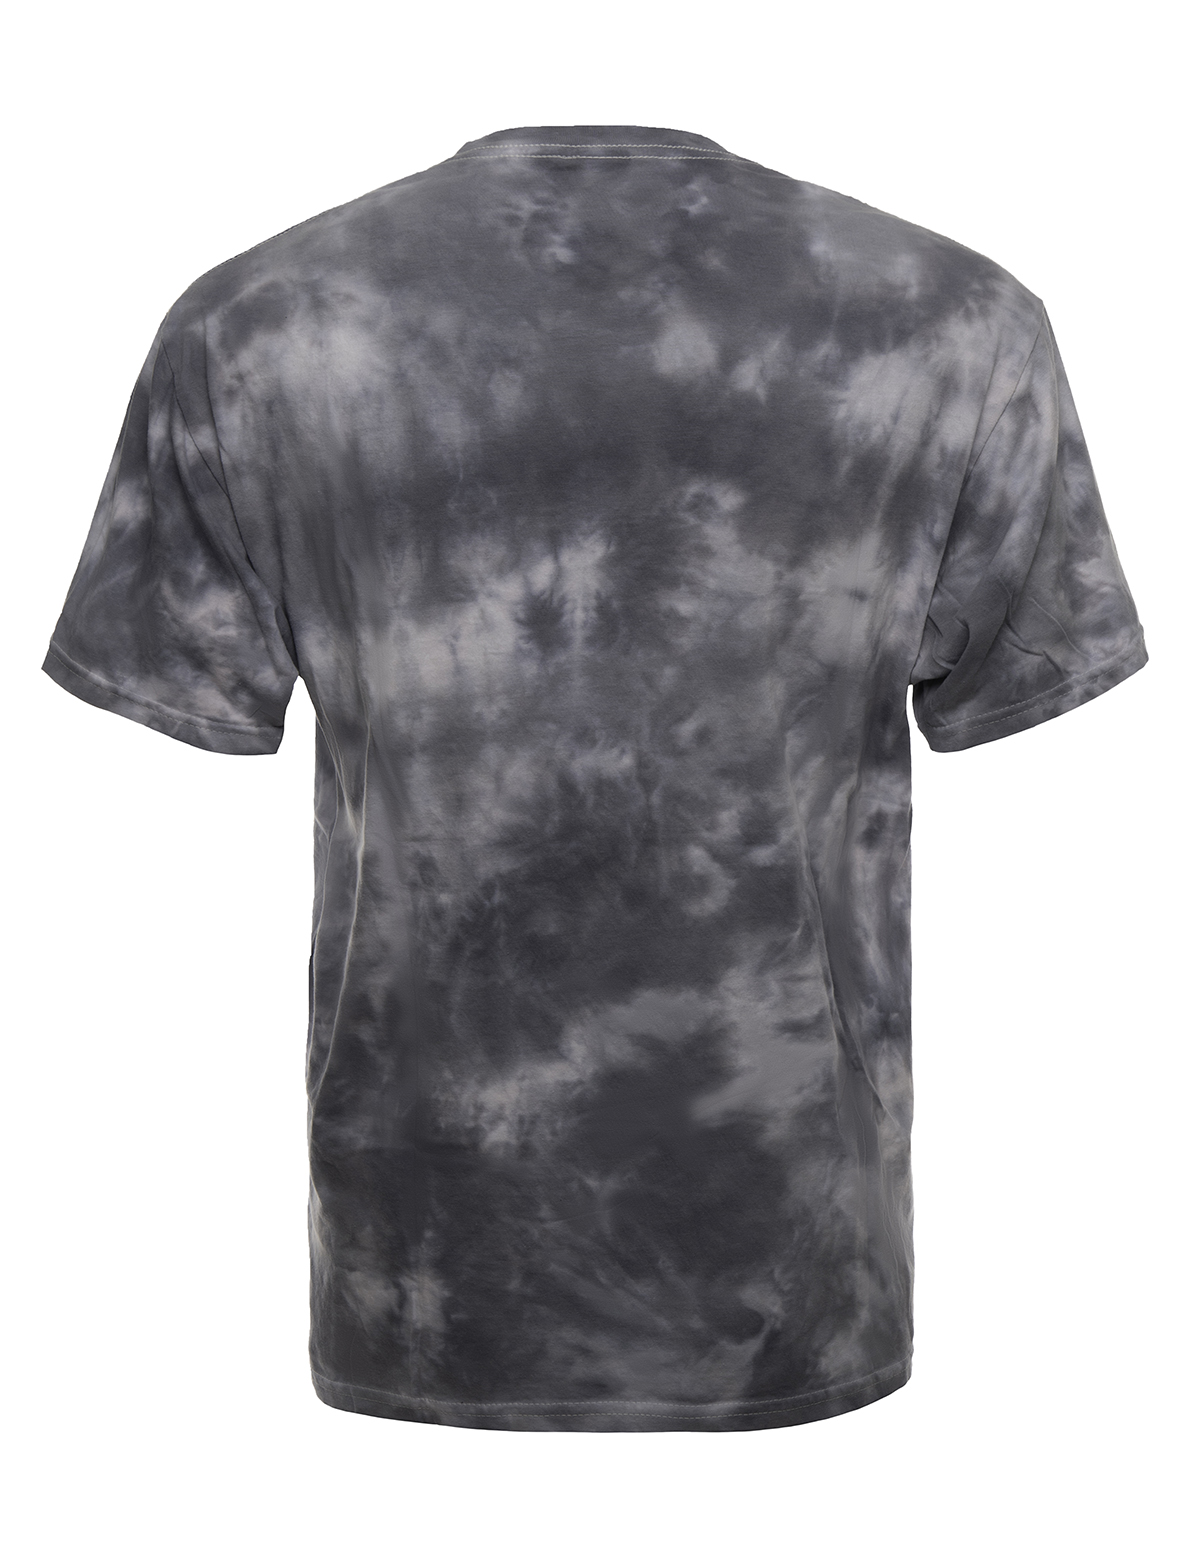 31 Cloud-Cloudwash Steel Back T-shirt